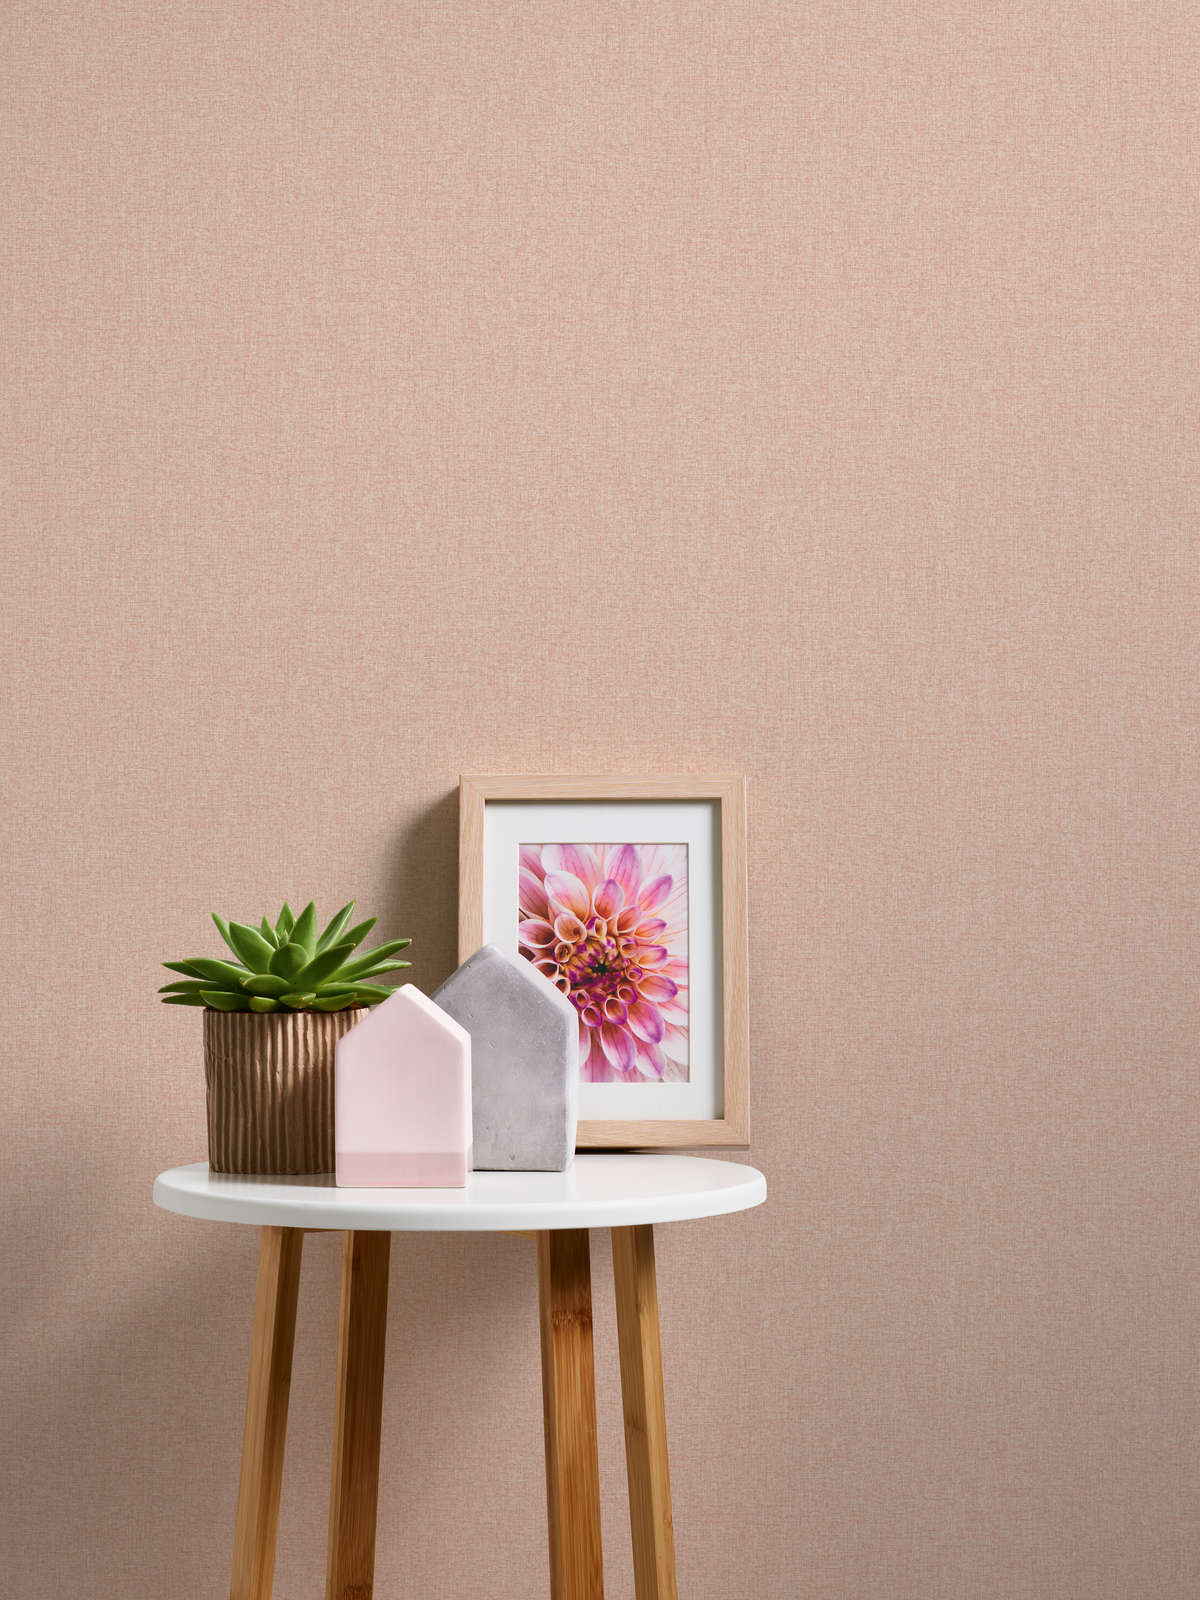             Non-woven wallpaper with textured design plain, matt - orange, pink
        